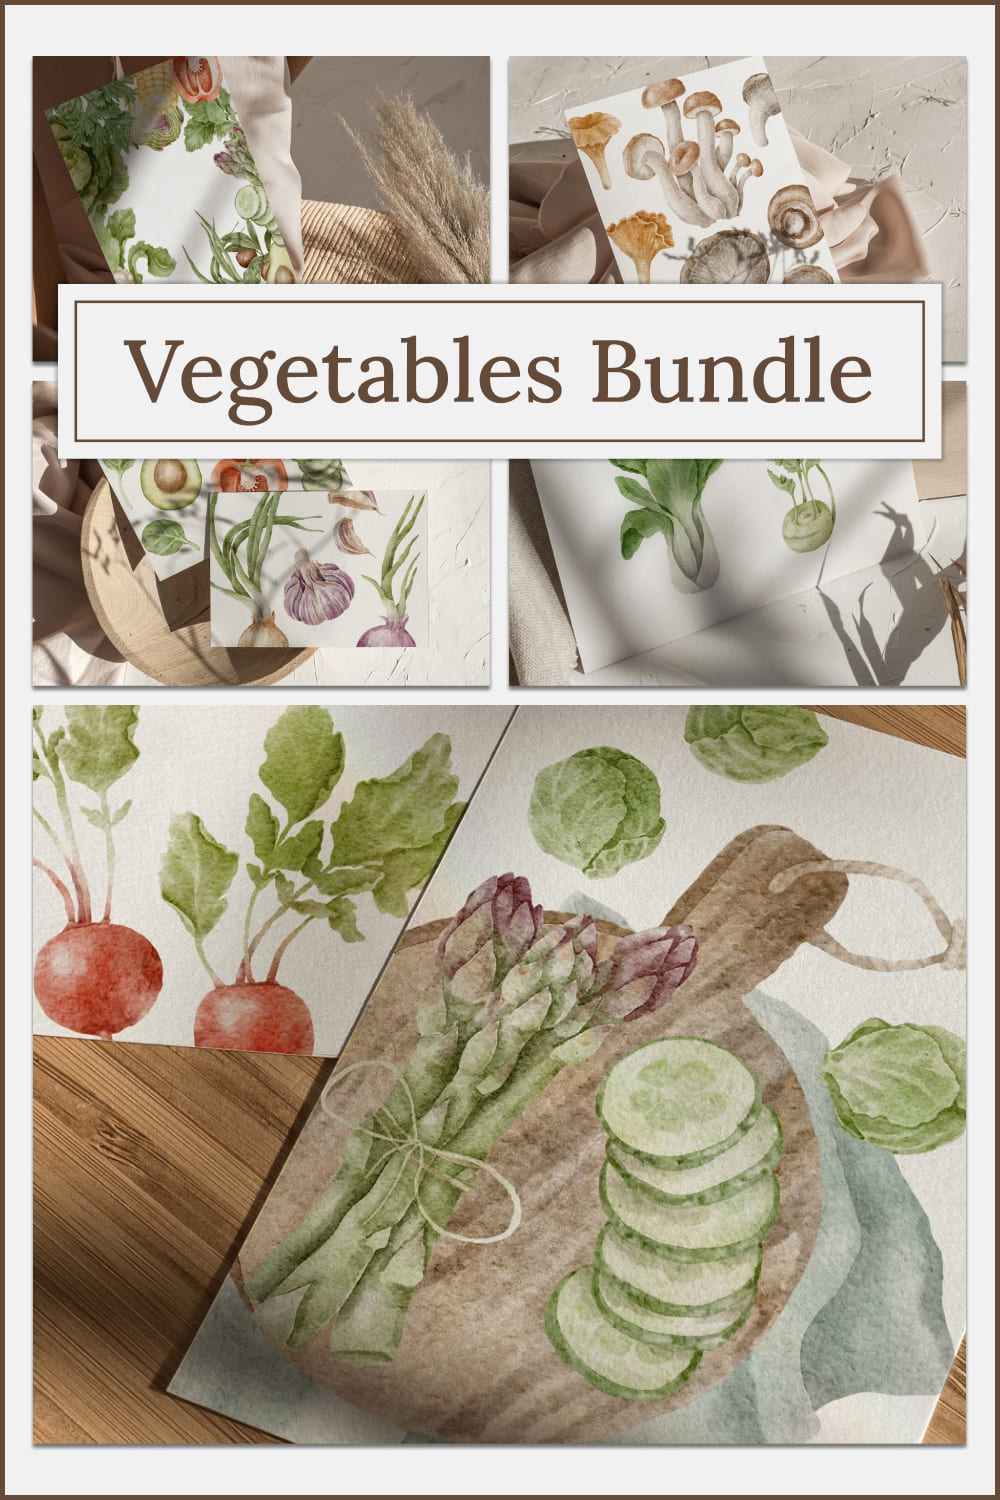 Vegetables bundle - pinterest image preview.